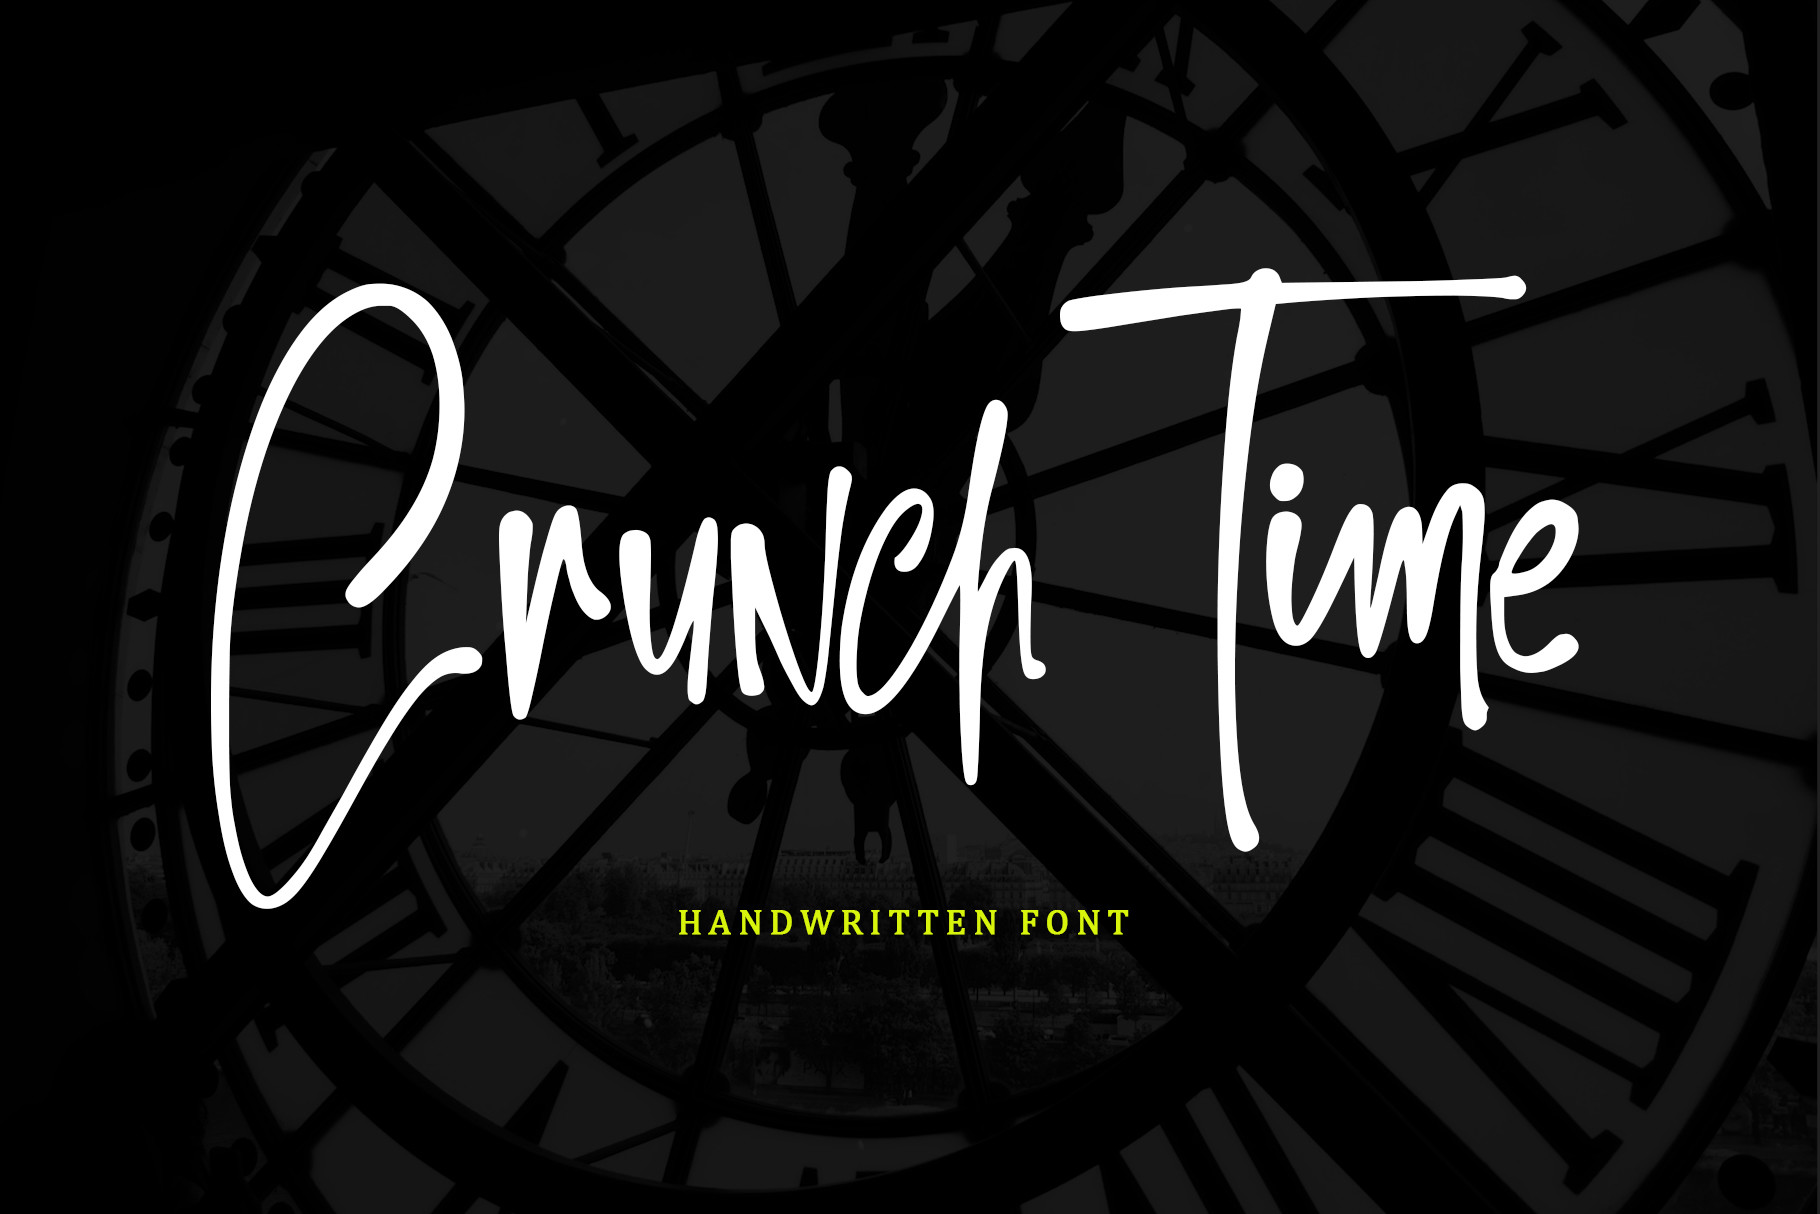 Font Crunch Time